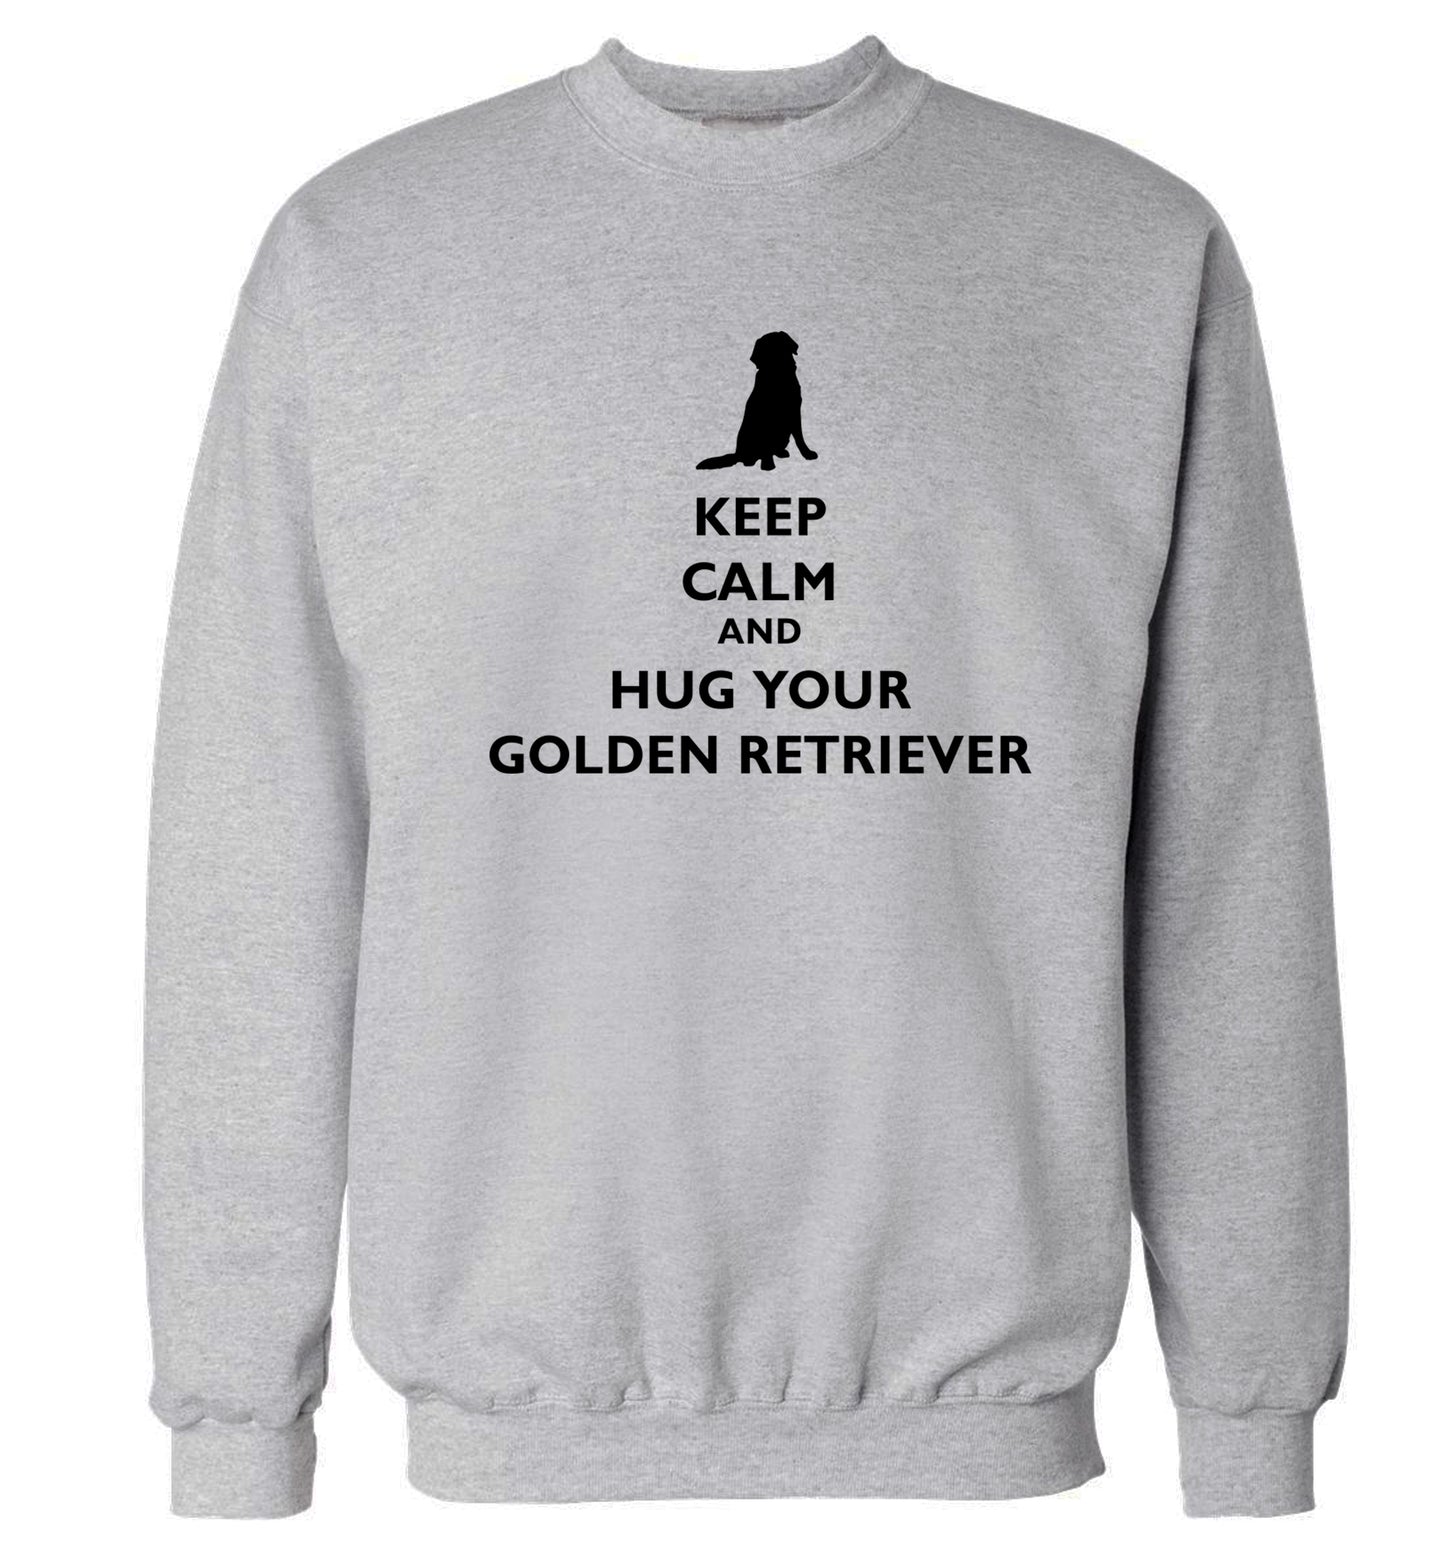 Keep calm and hug your golden retriever Adult's unisex grey Sweater 2XL